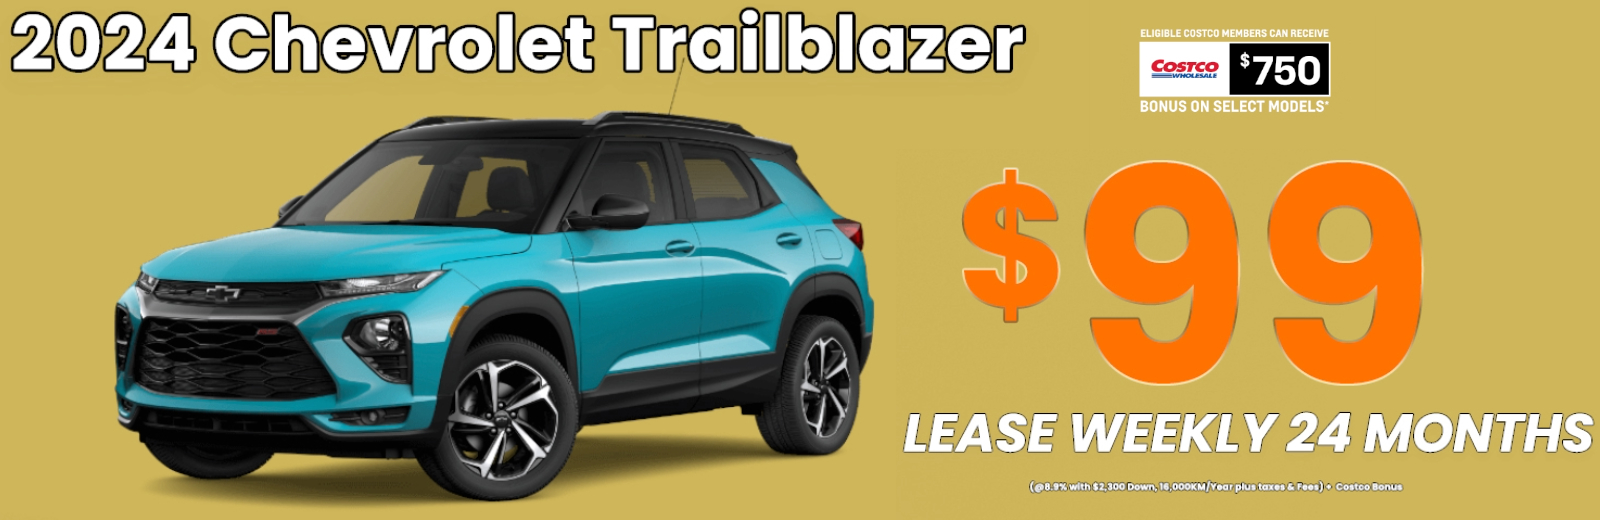 Chevy Trailblazer Lease Offer